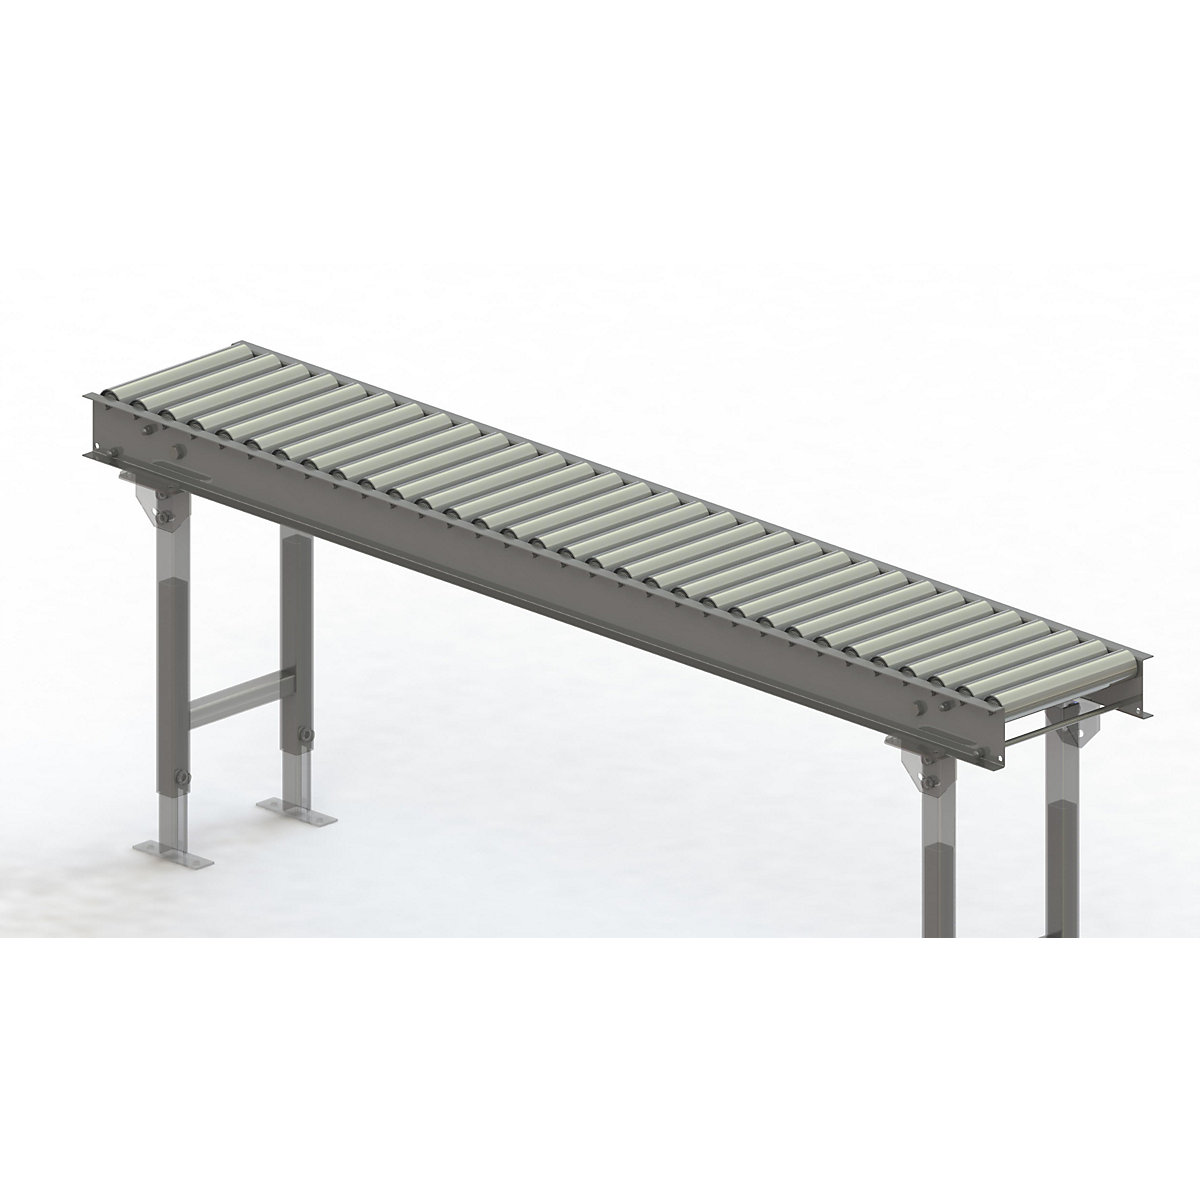 Gura – Roller conveyor, steel frame with zinc plated steel rollers, track width 300 mm, distance between axles 62.5 mm, length 2 m